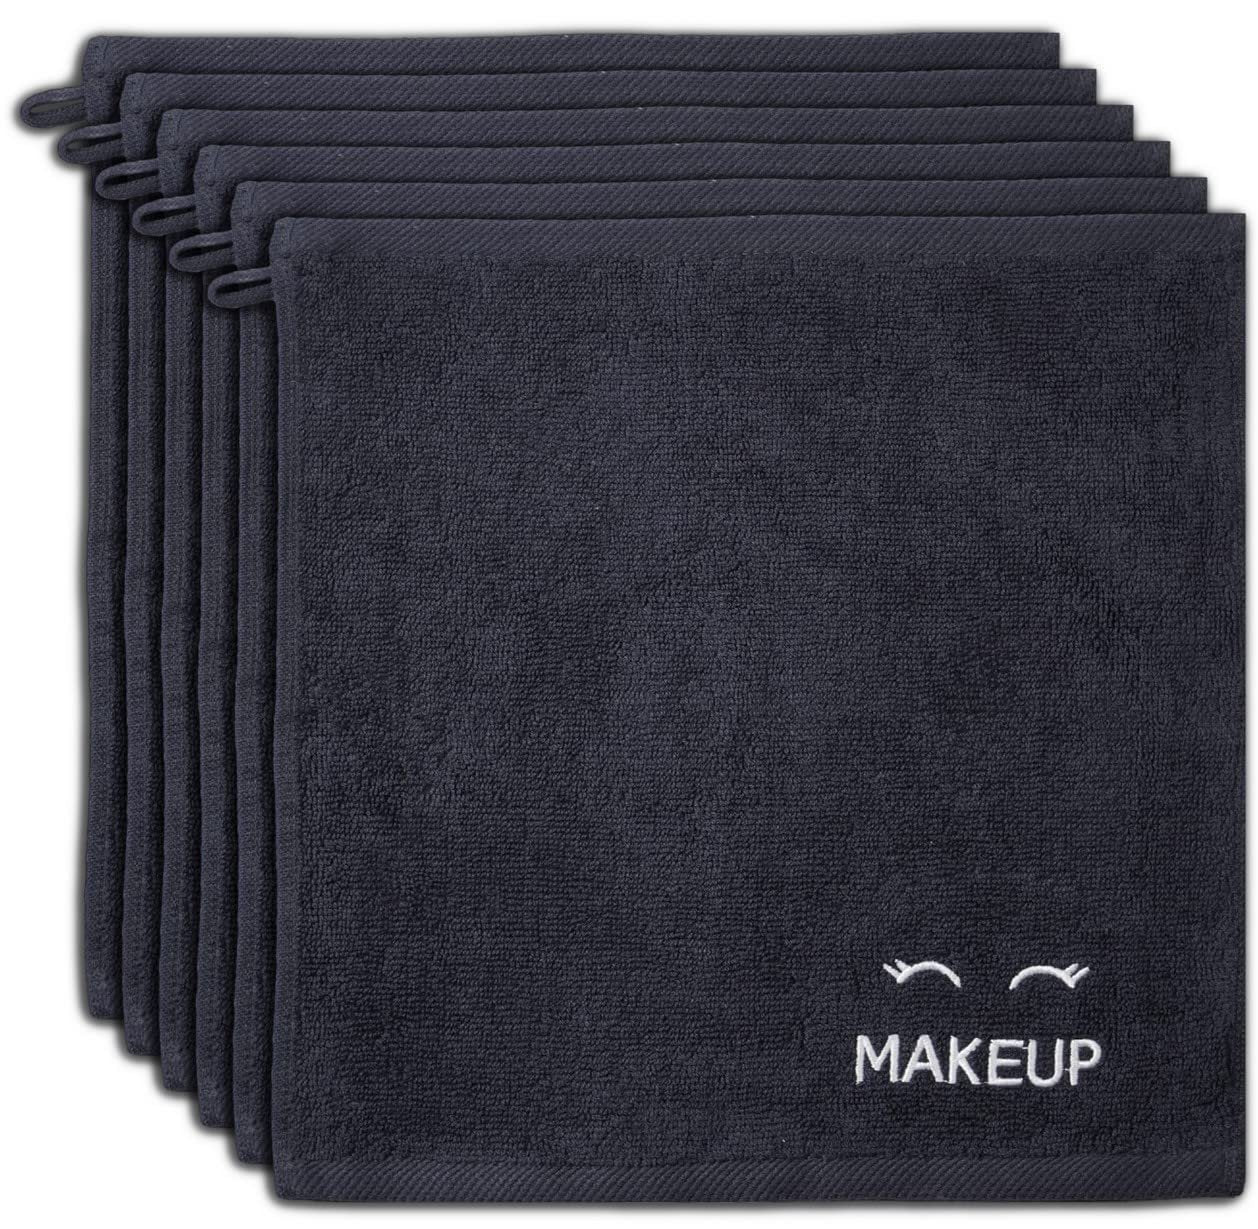 Bleach Safe Black Makeup Towels | Luxury Ultra Soft Cotton Face Washcloths Make up Removal | 6 Pack